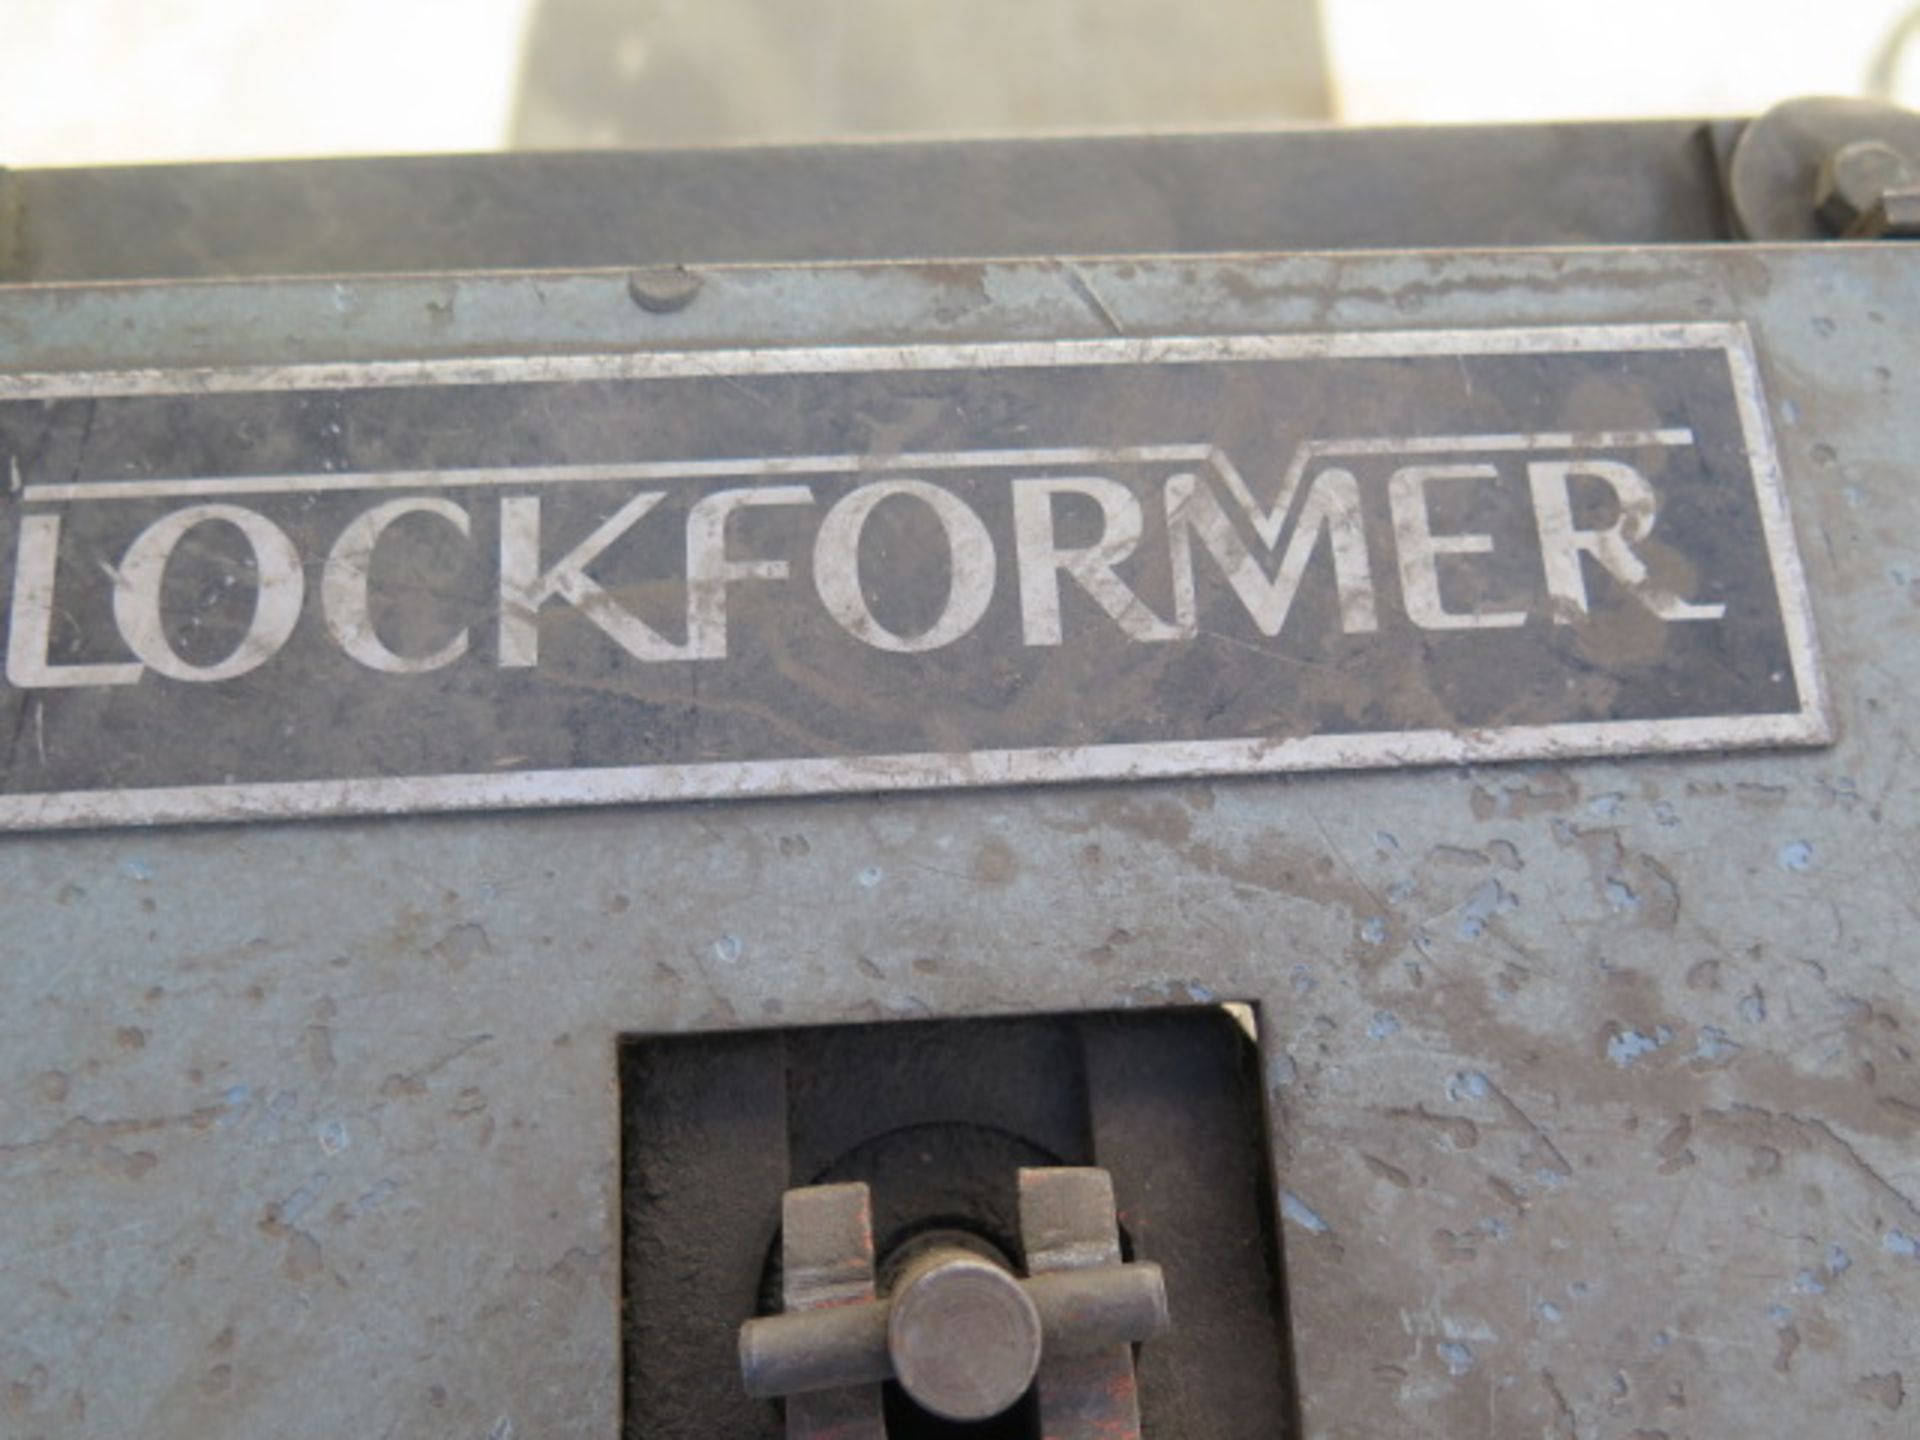 Lockformer Pneumatic Notcher (SOLD AS-IS - NO WARRANTY) - Image 3 of 6